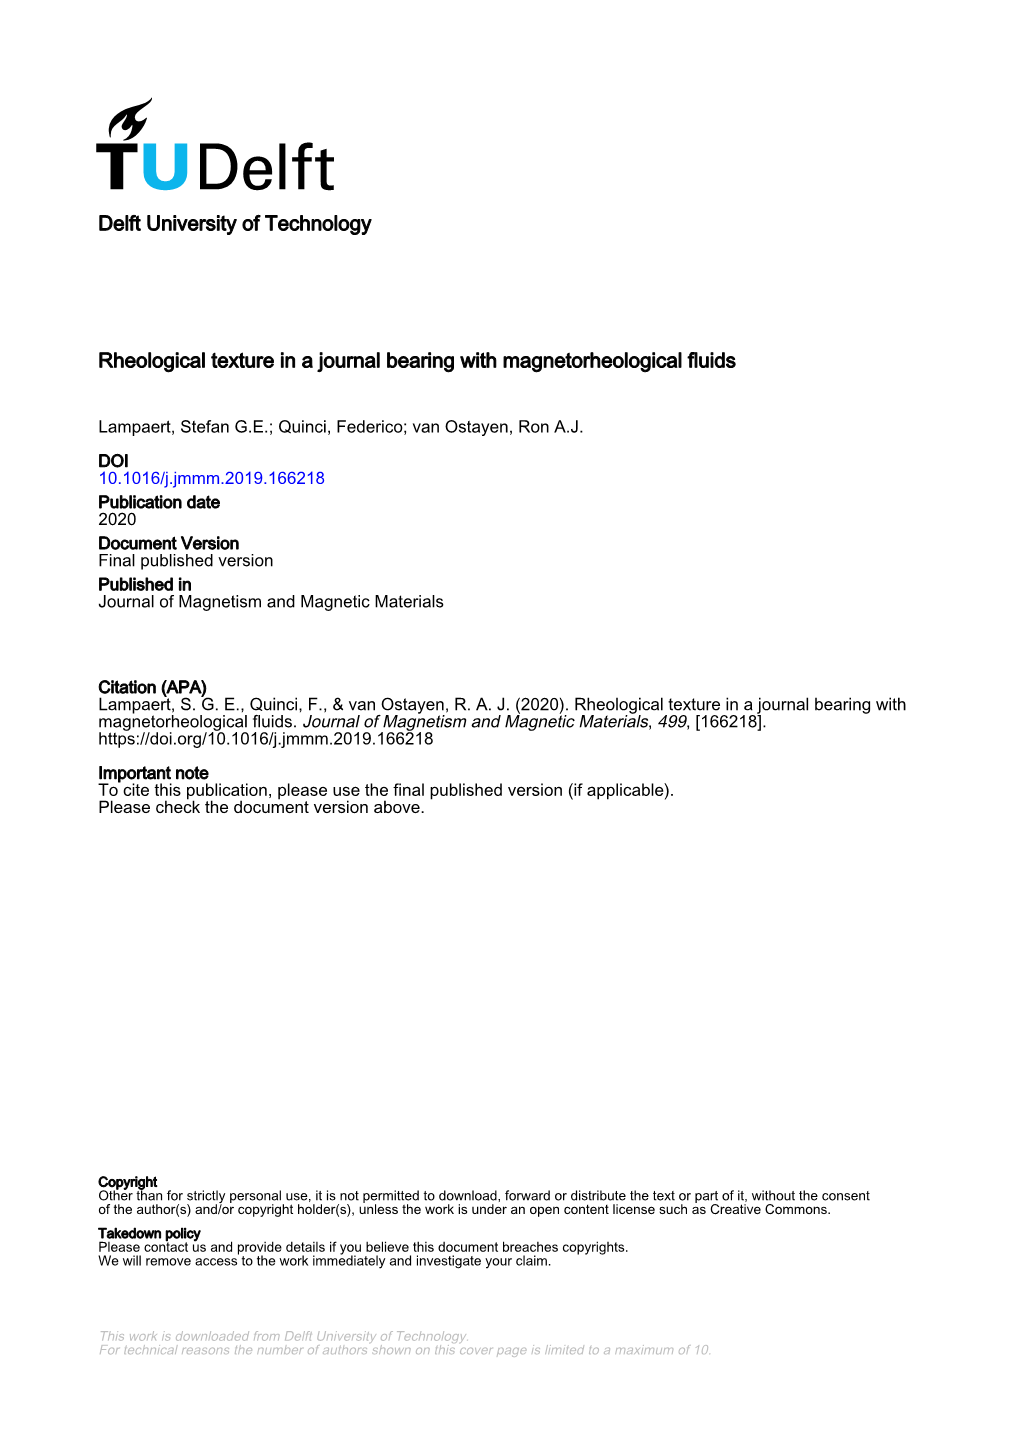 Rheological Texture in a Journal Bearing with Magnetorheological Fluids